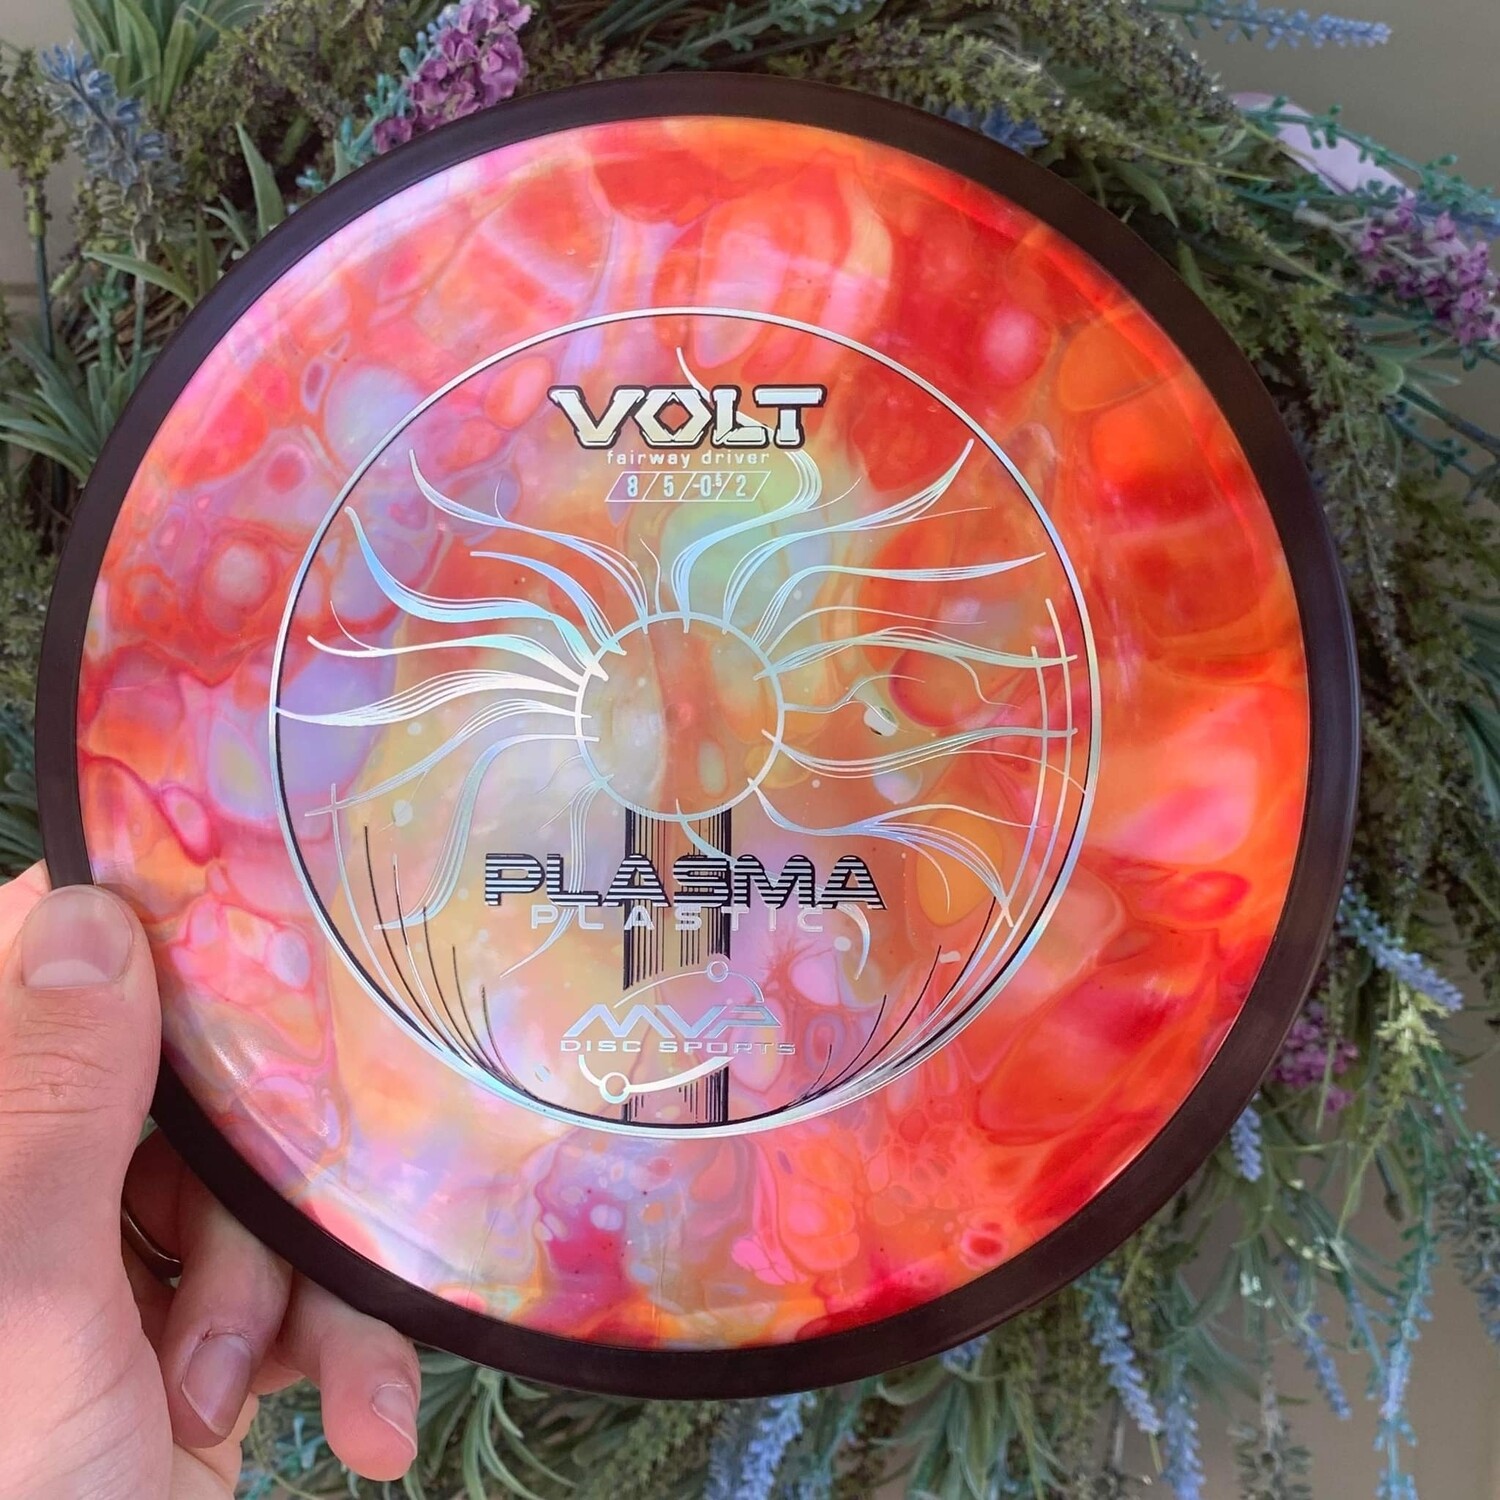 MVP Volt Plasma 174. Free Shipping!